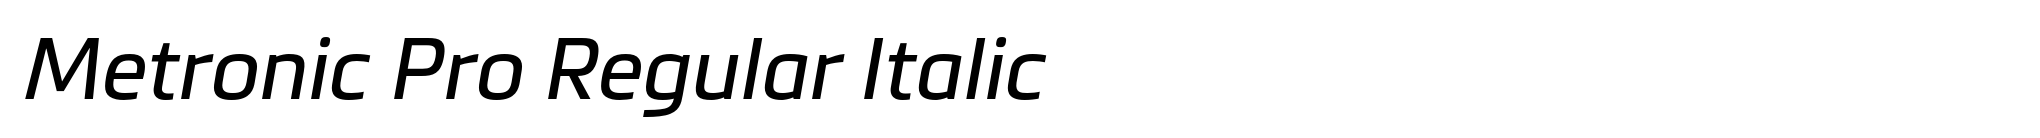 Metronic Pro Regular Italic image